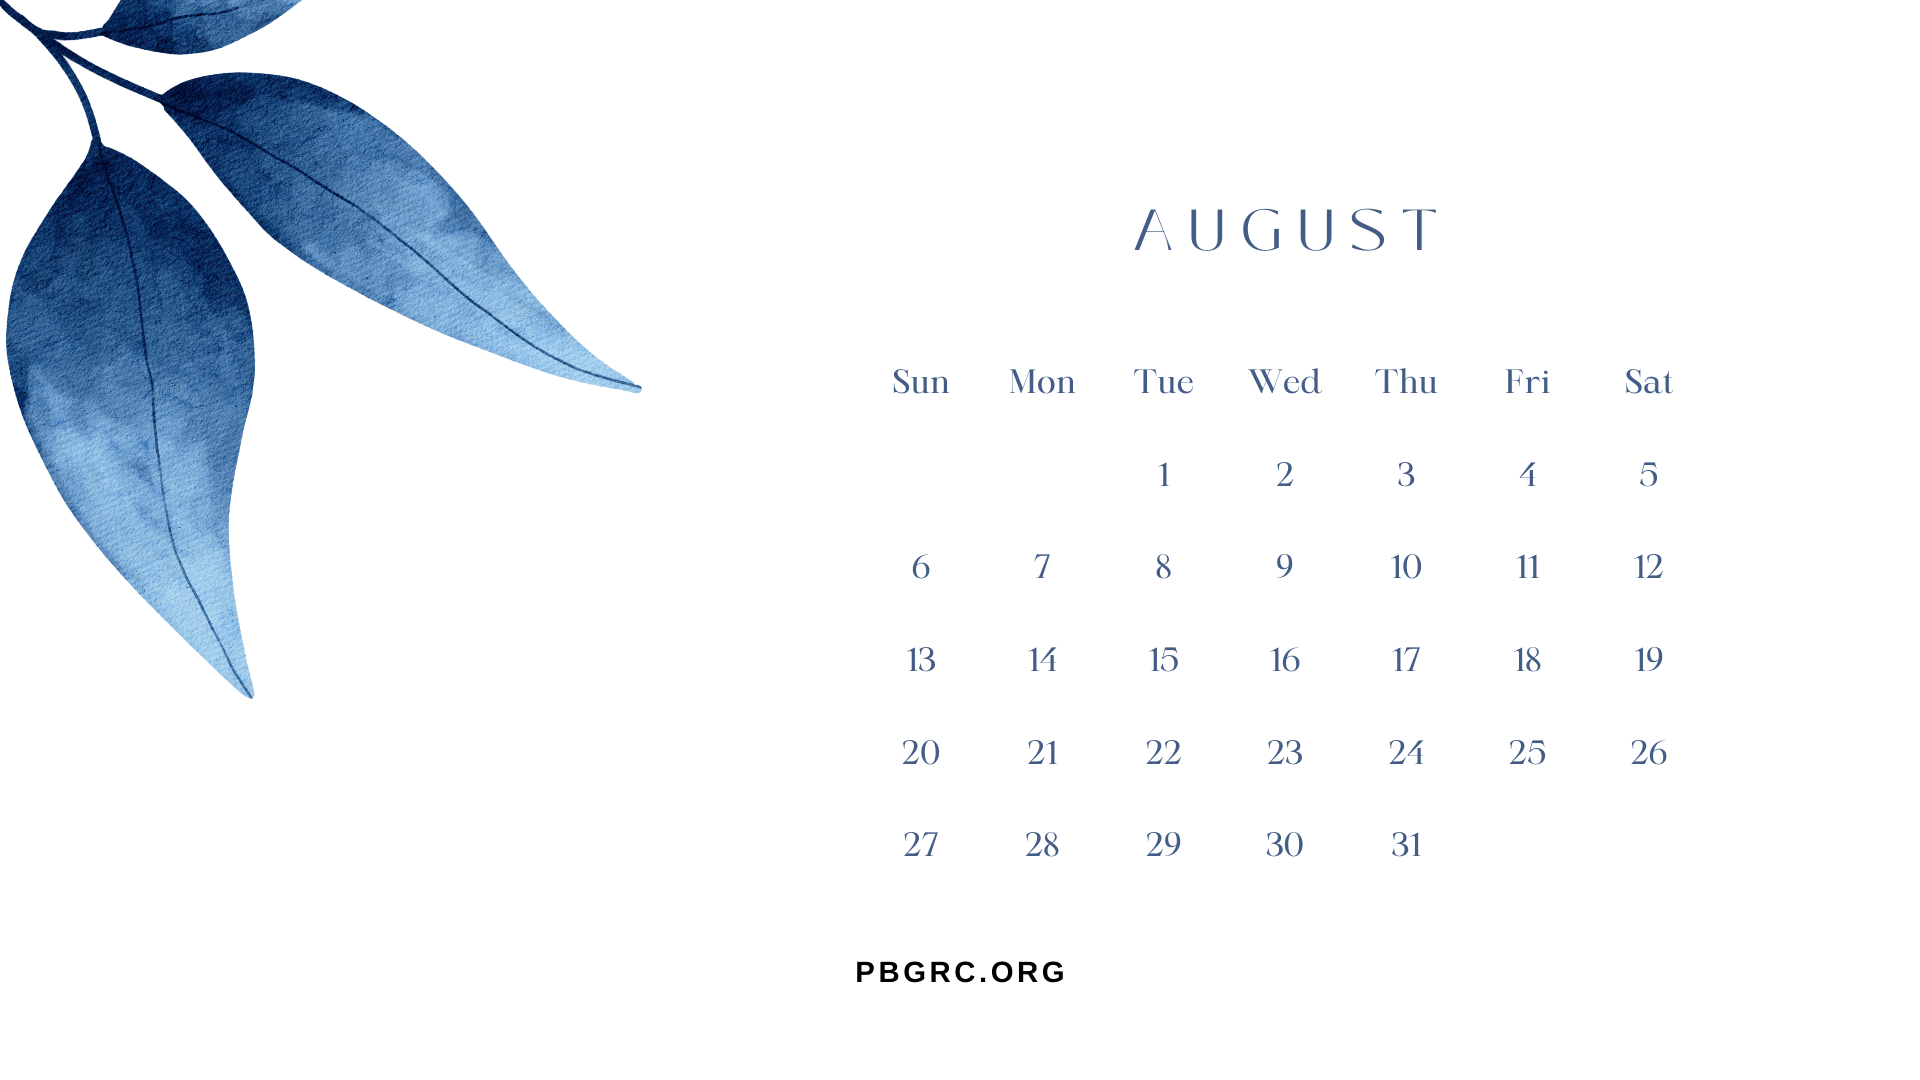 Cute August 2023 Floral Calendar Wallpaper